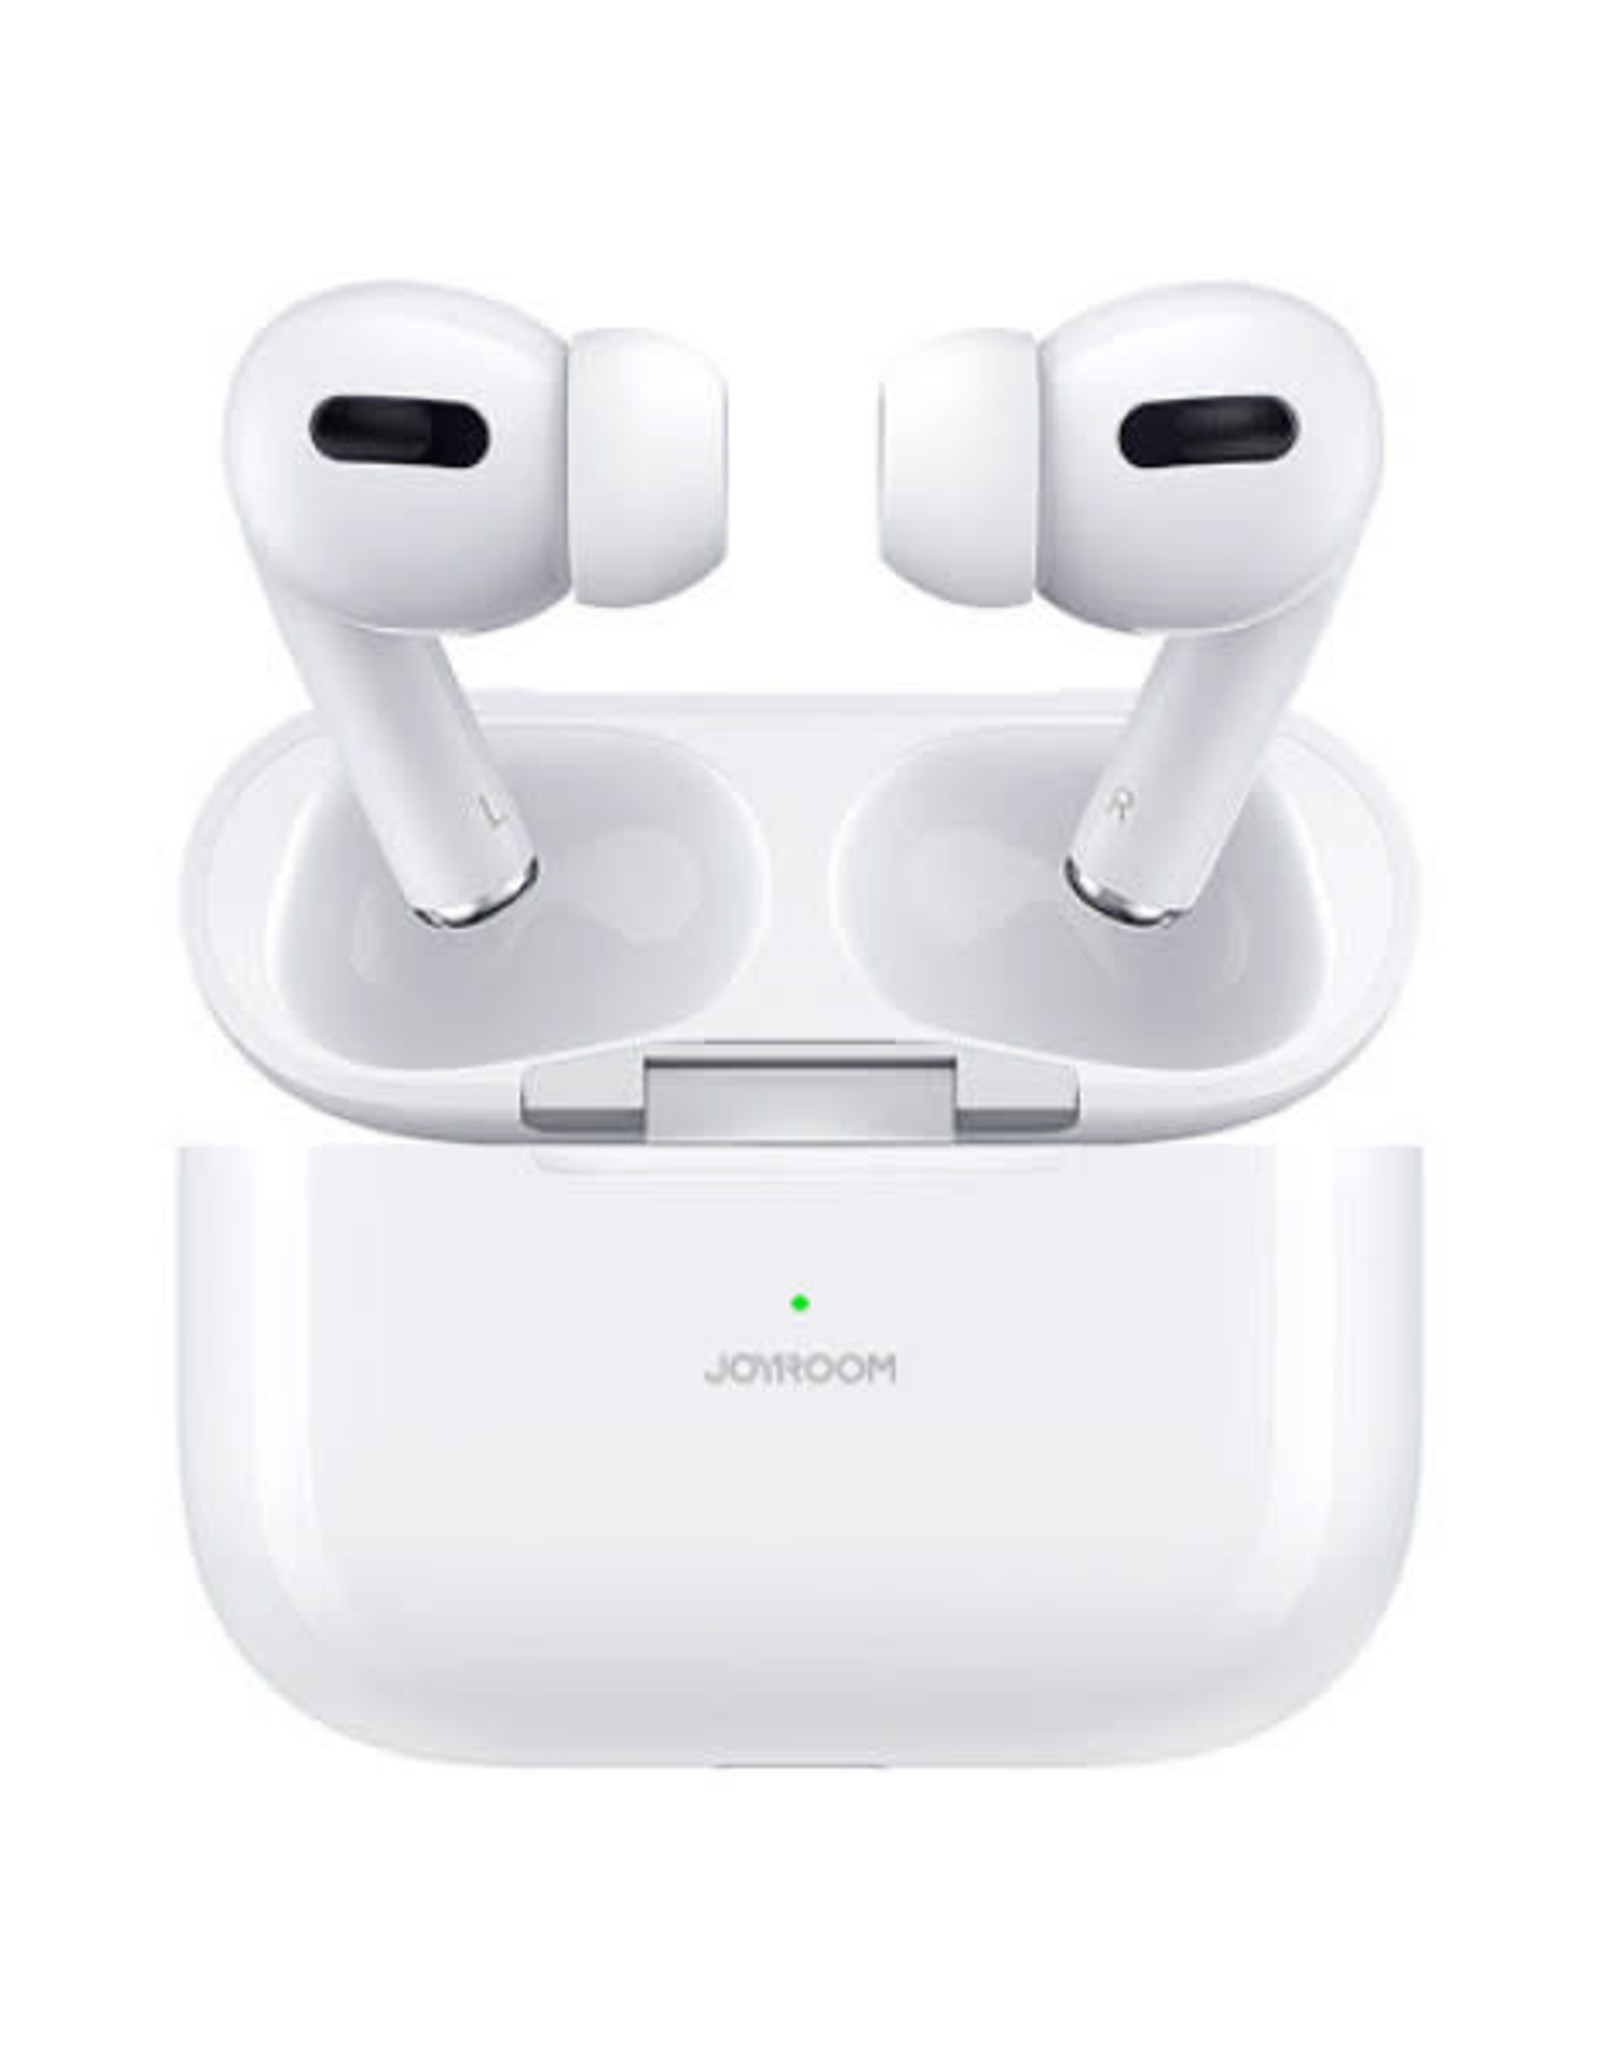 Joyroom JOYROOM AirPod JR-T03S Pro Bluetooth 5.0 ANC TWS Noise Reduction Bluetooth Earphone with Charging Case